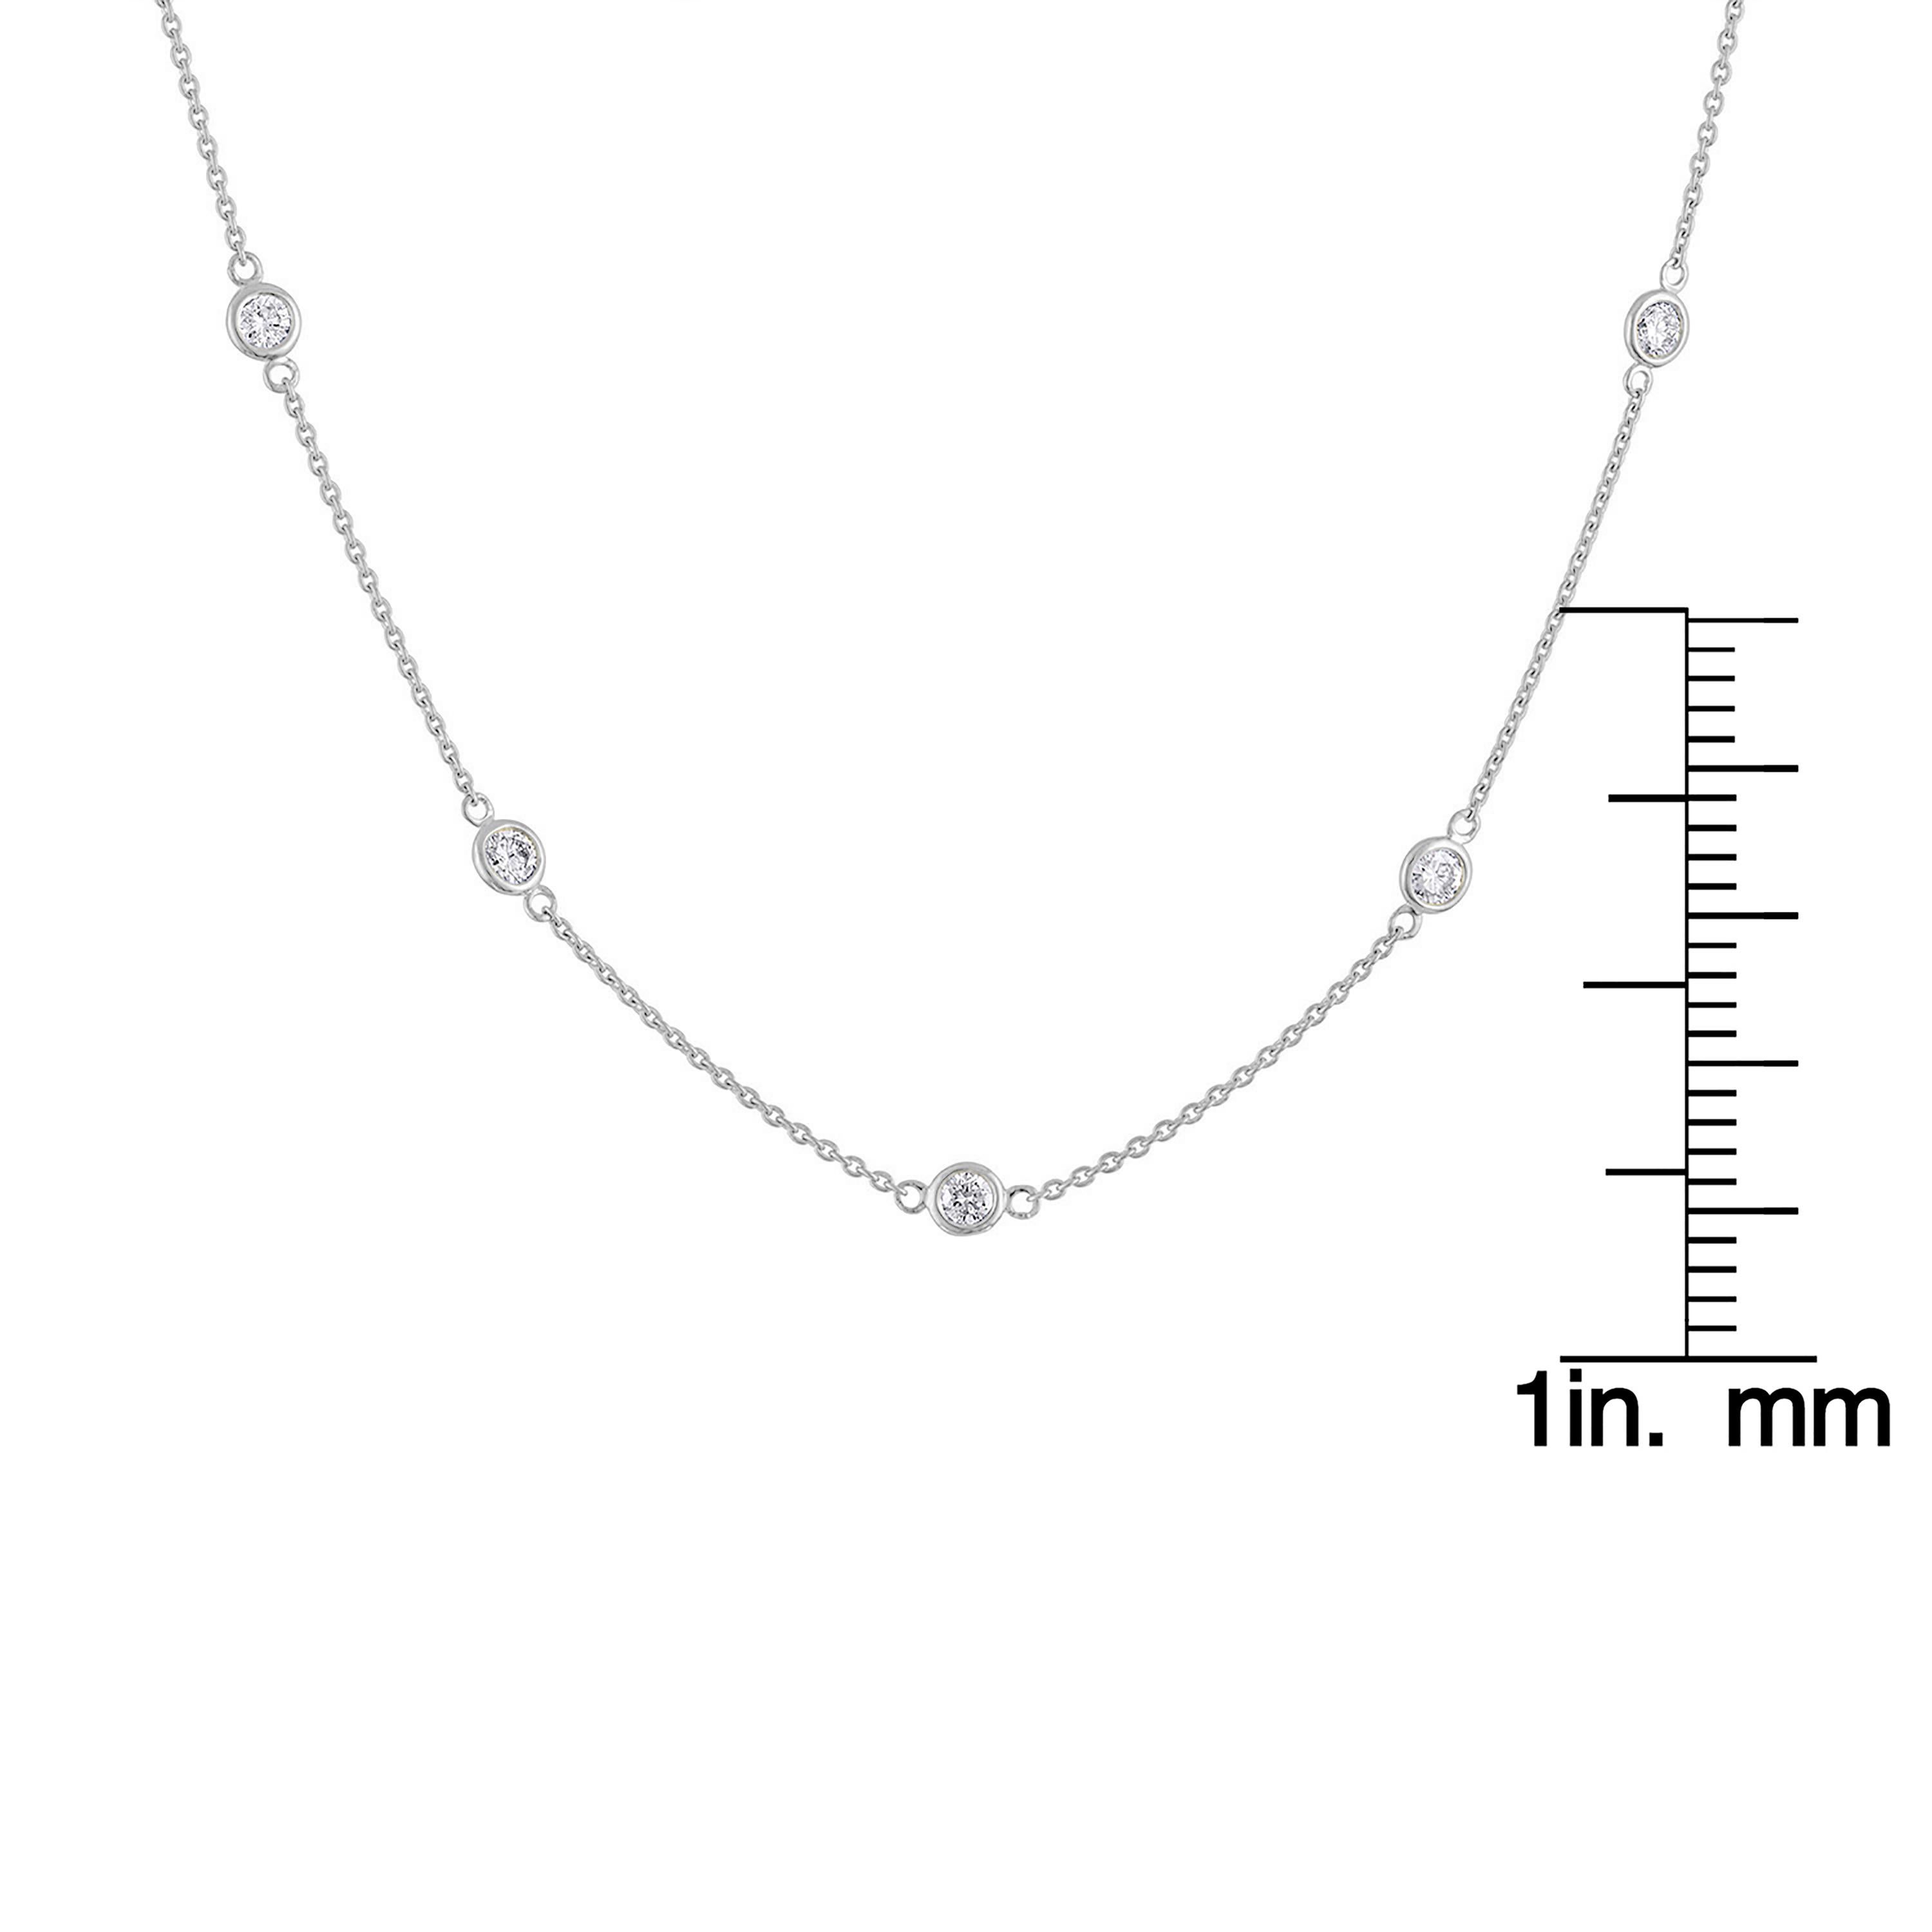 Contemporary 14K White Gold 1 1/10 Carat Diamond Station Necklace